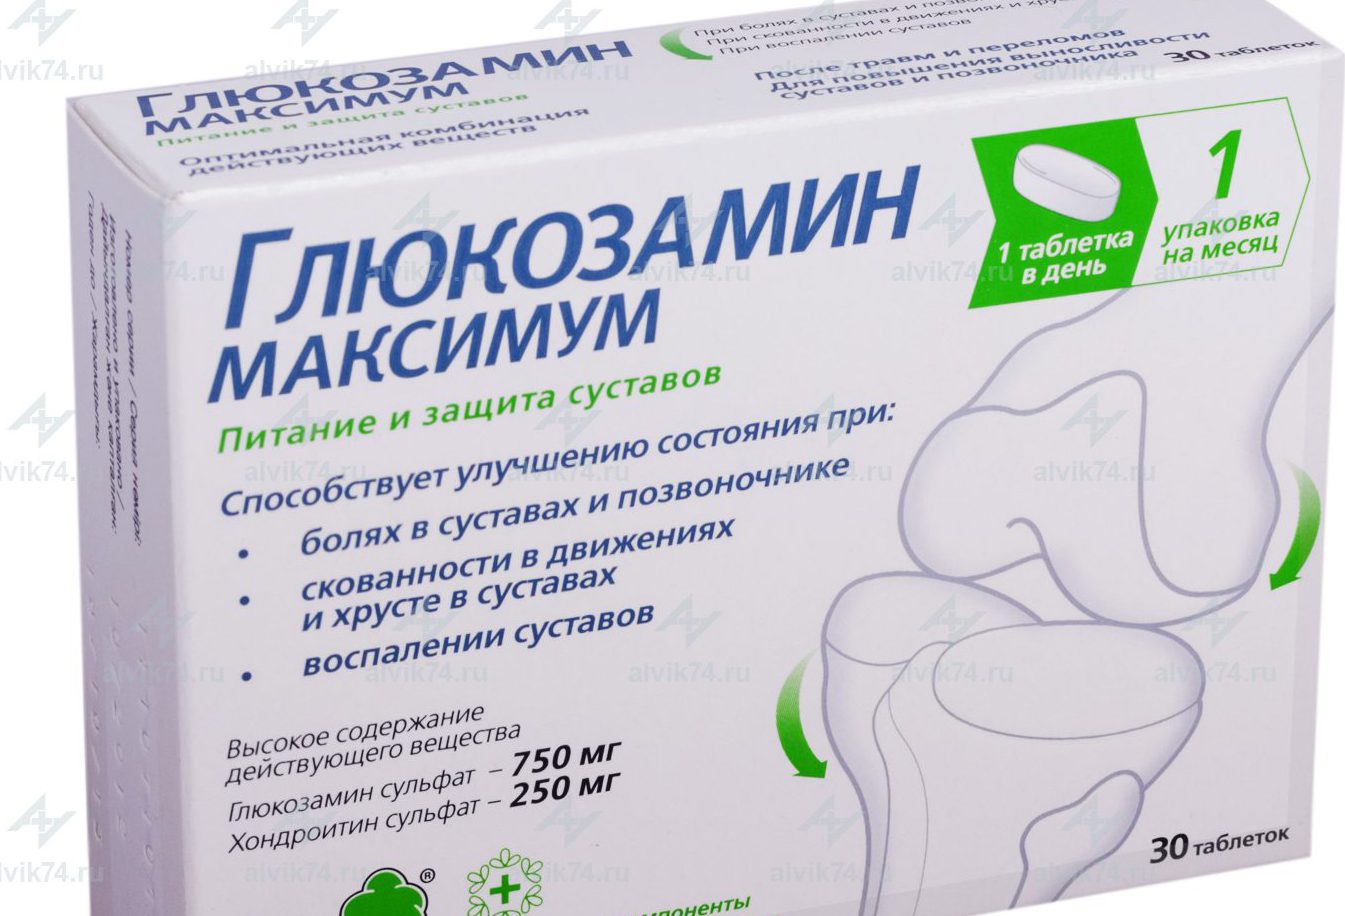 Хондроитин Цена В Аптеках Саранска